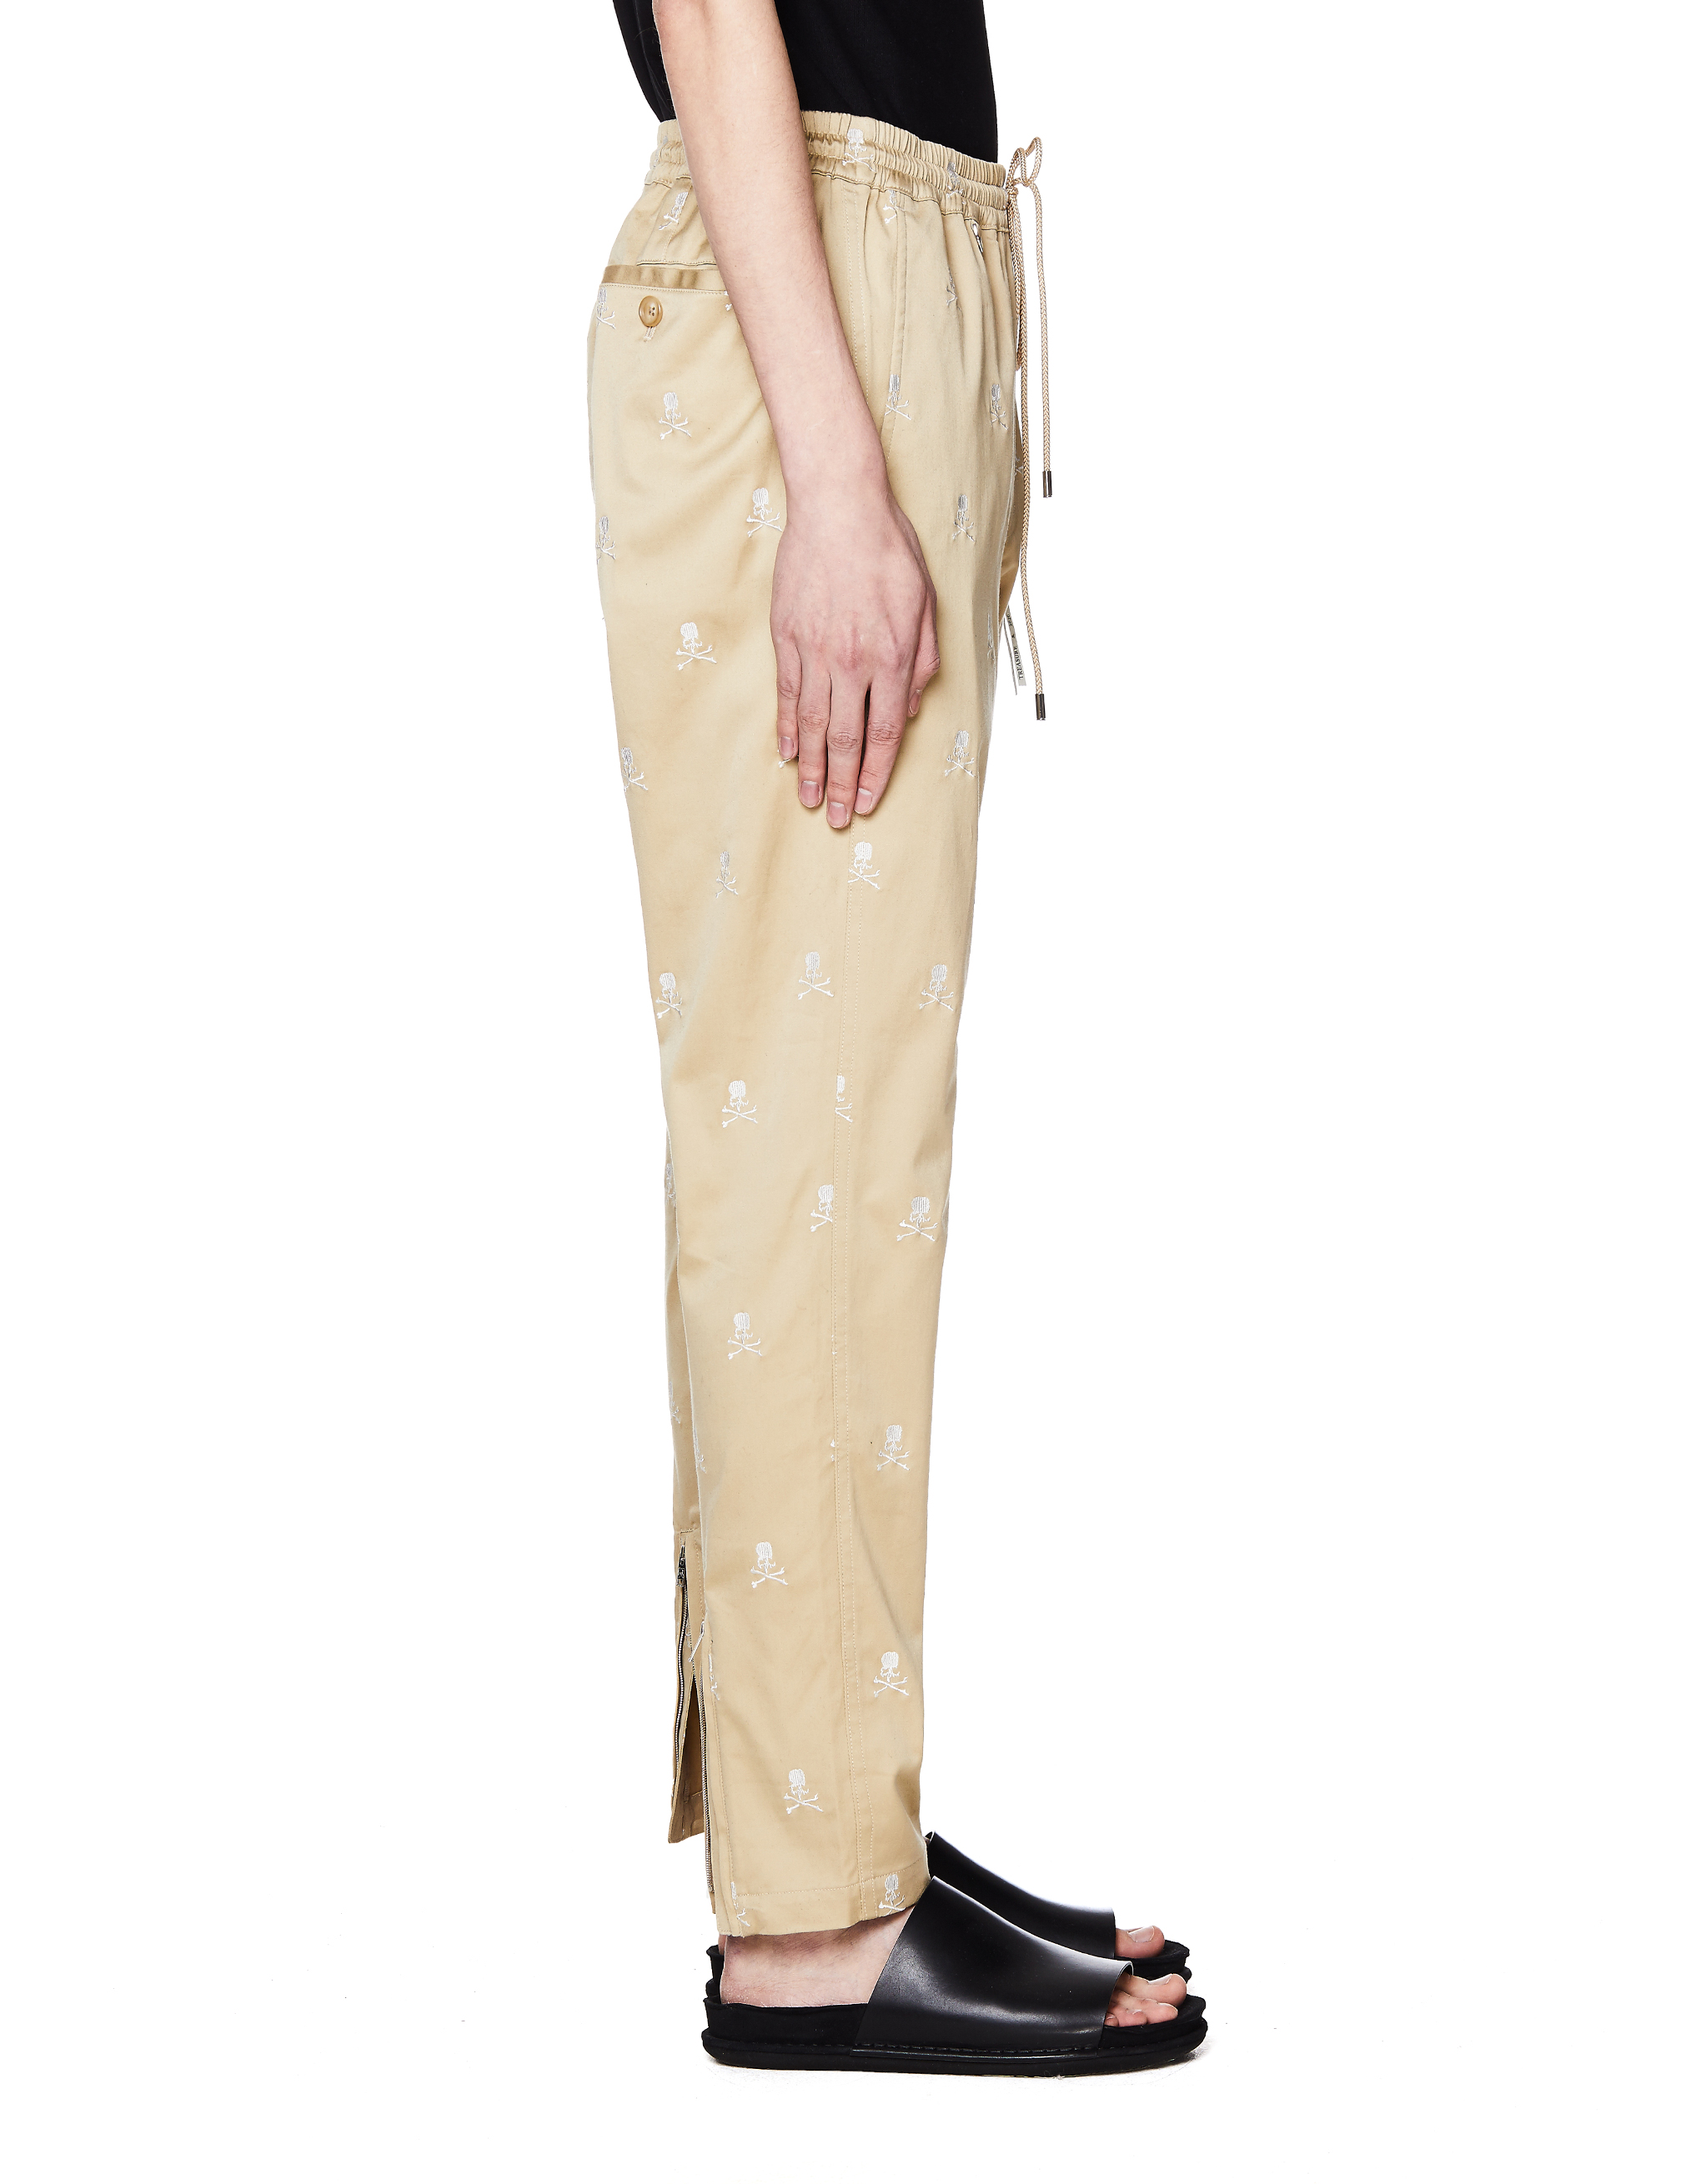 Бежевые брюки с вышивкой - Mastermind WORLD PA014-003/beige Фото 2